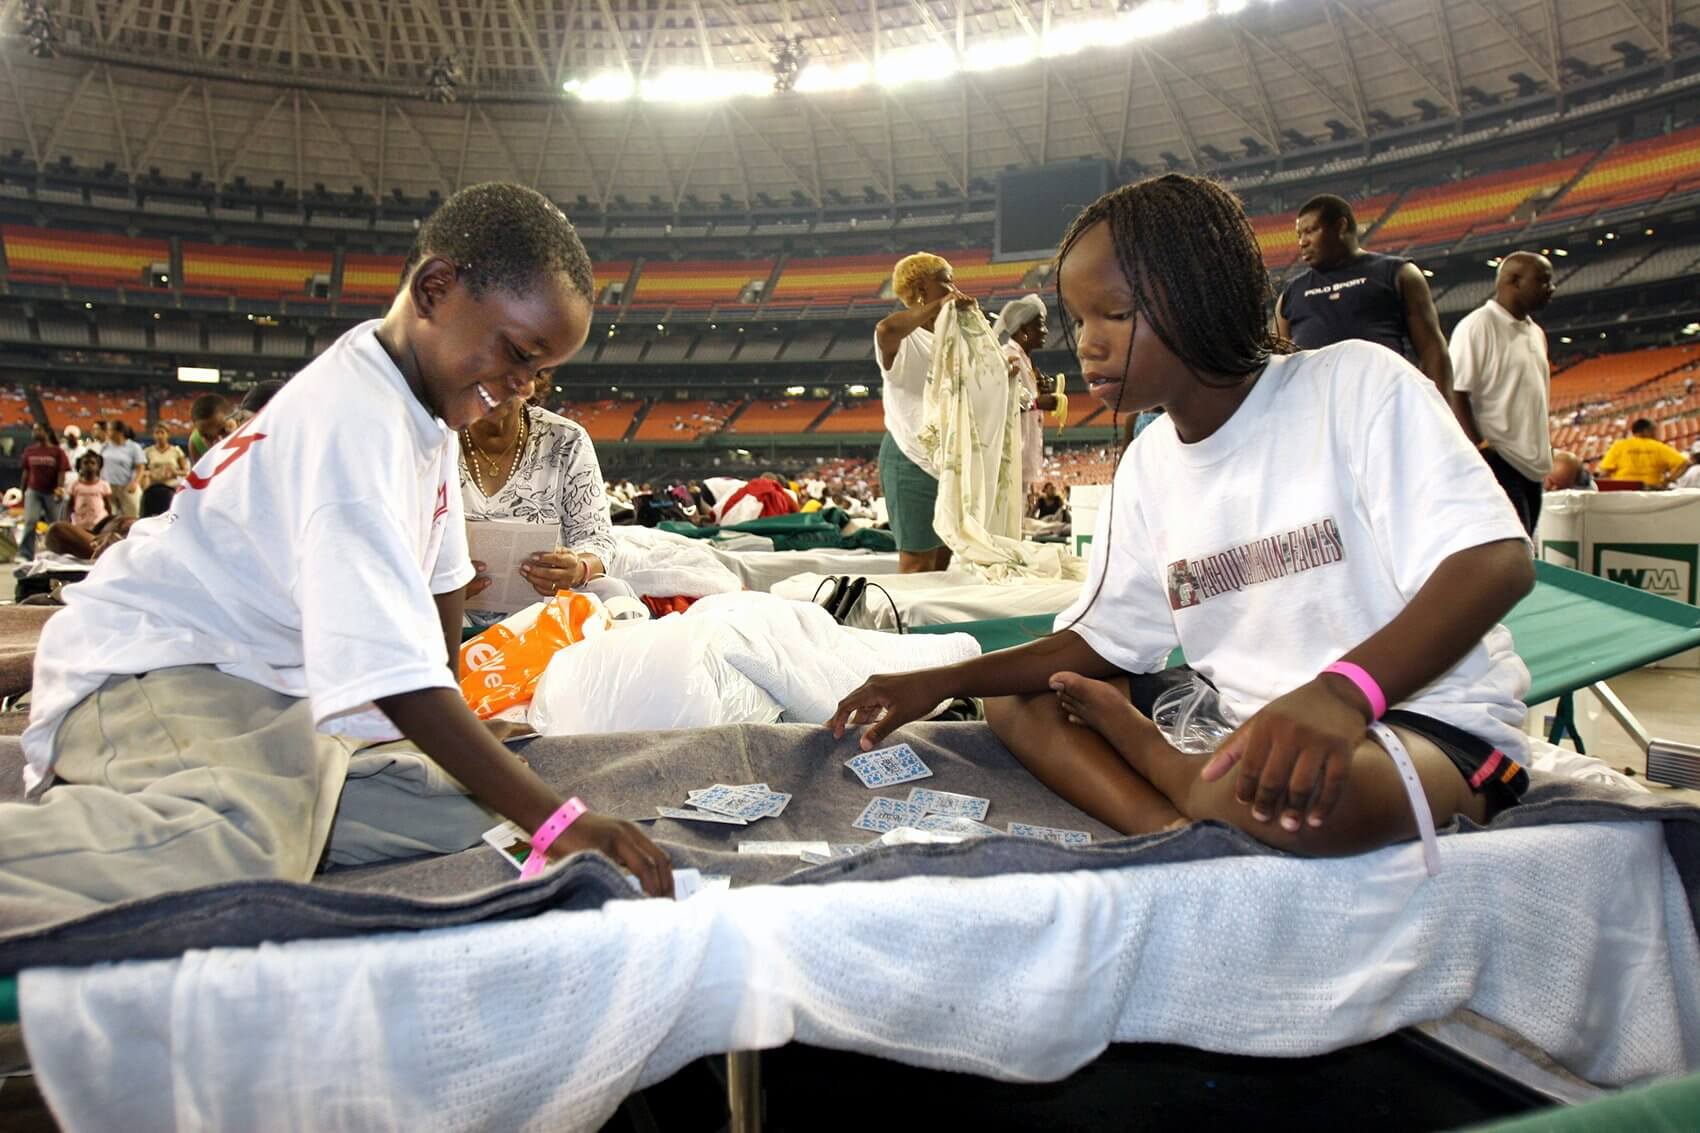 Hurricane Katrina survivors pass the time at the Astrodome. (Photo courtesy Texas Children's Hospital)